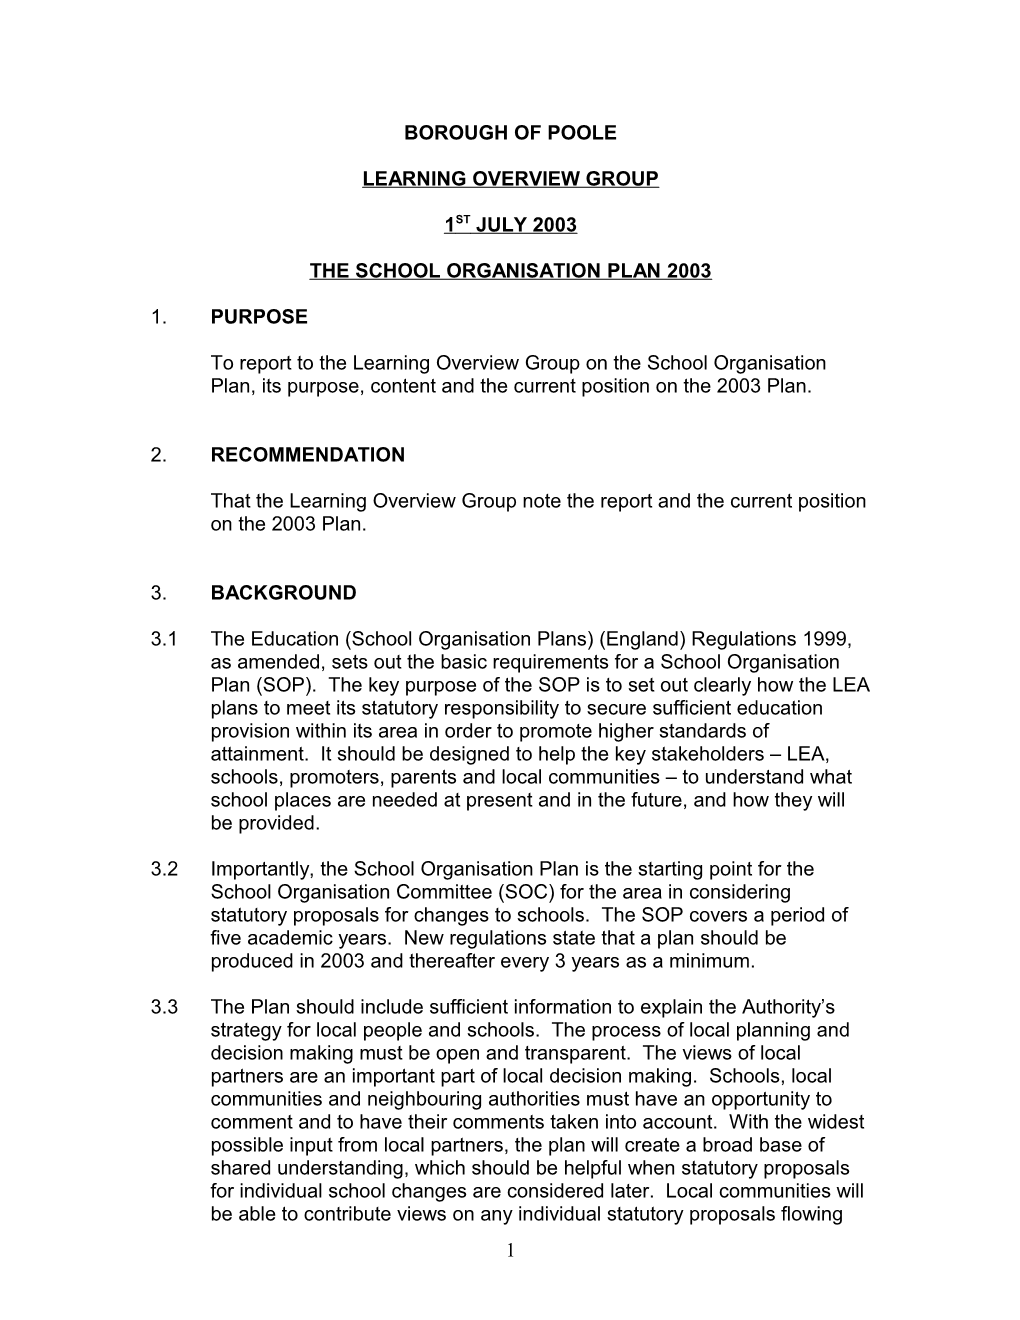 The School Organisation Plan 2003